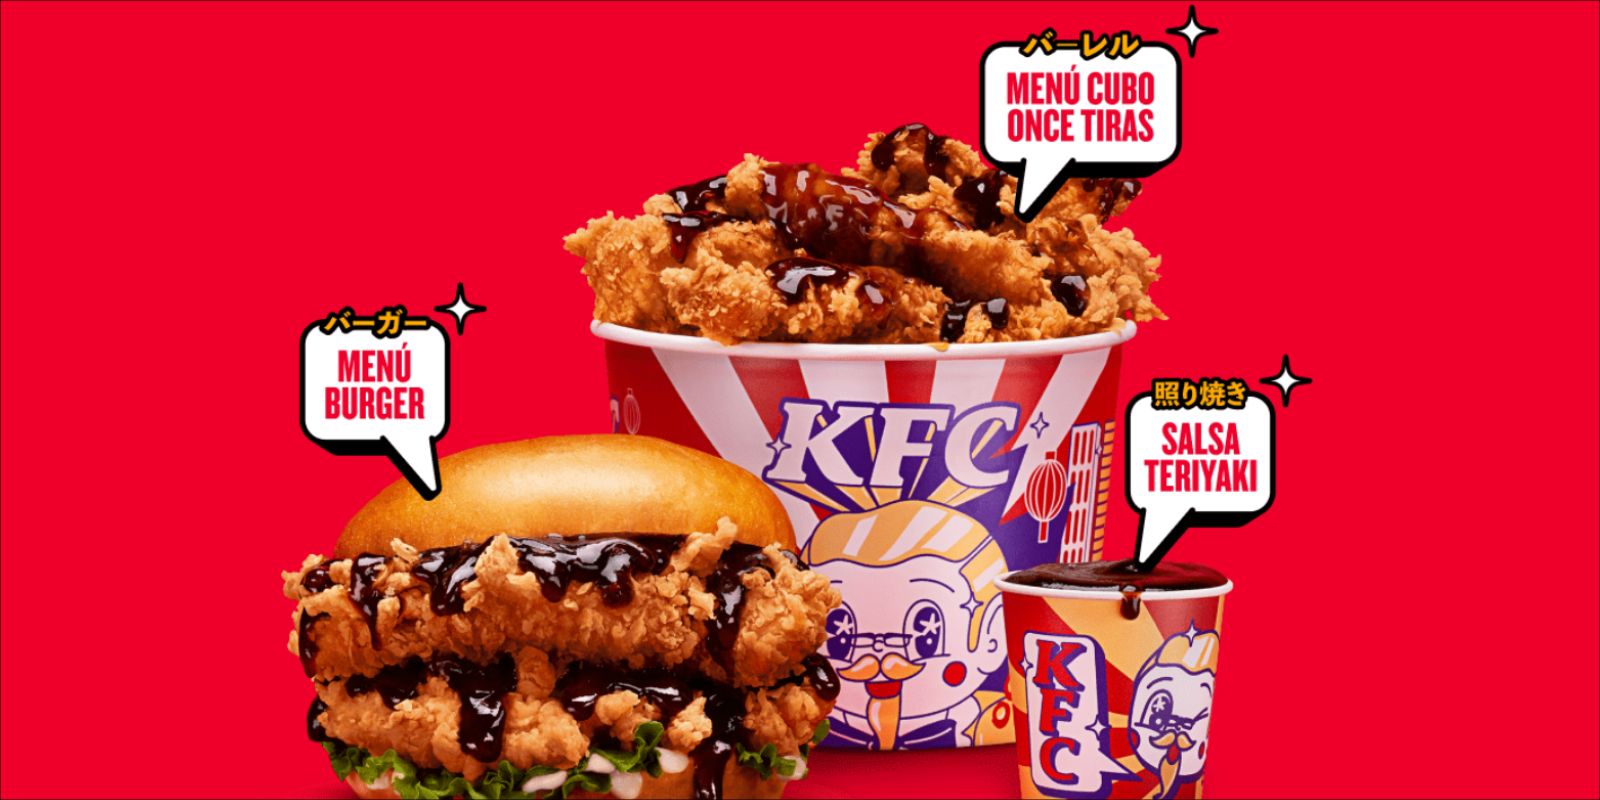 KFC Otaku Burger, teriyaki sauce, and a chicken bucket